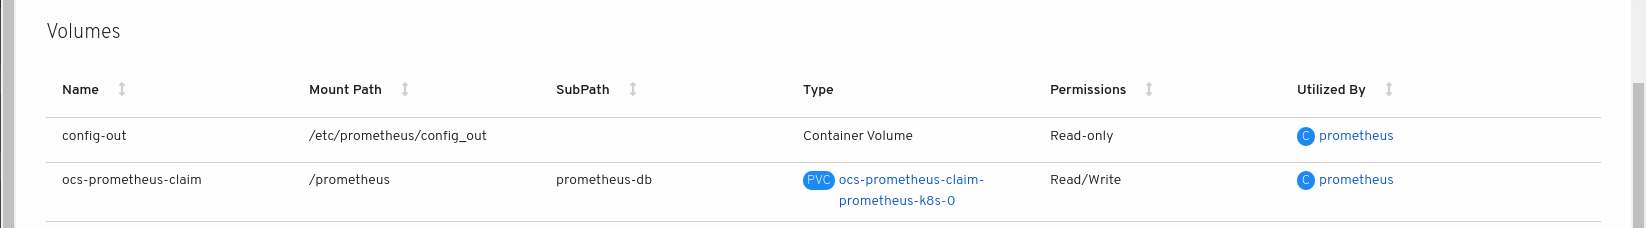 prometheus Pod에 연결된 영구 볼륨 클레임을 표시하는 OpenShift 웹 콘솔의 스크린샷